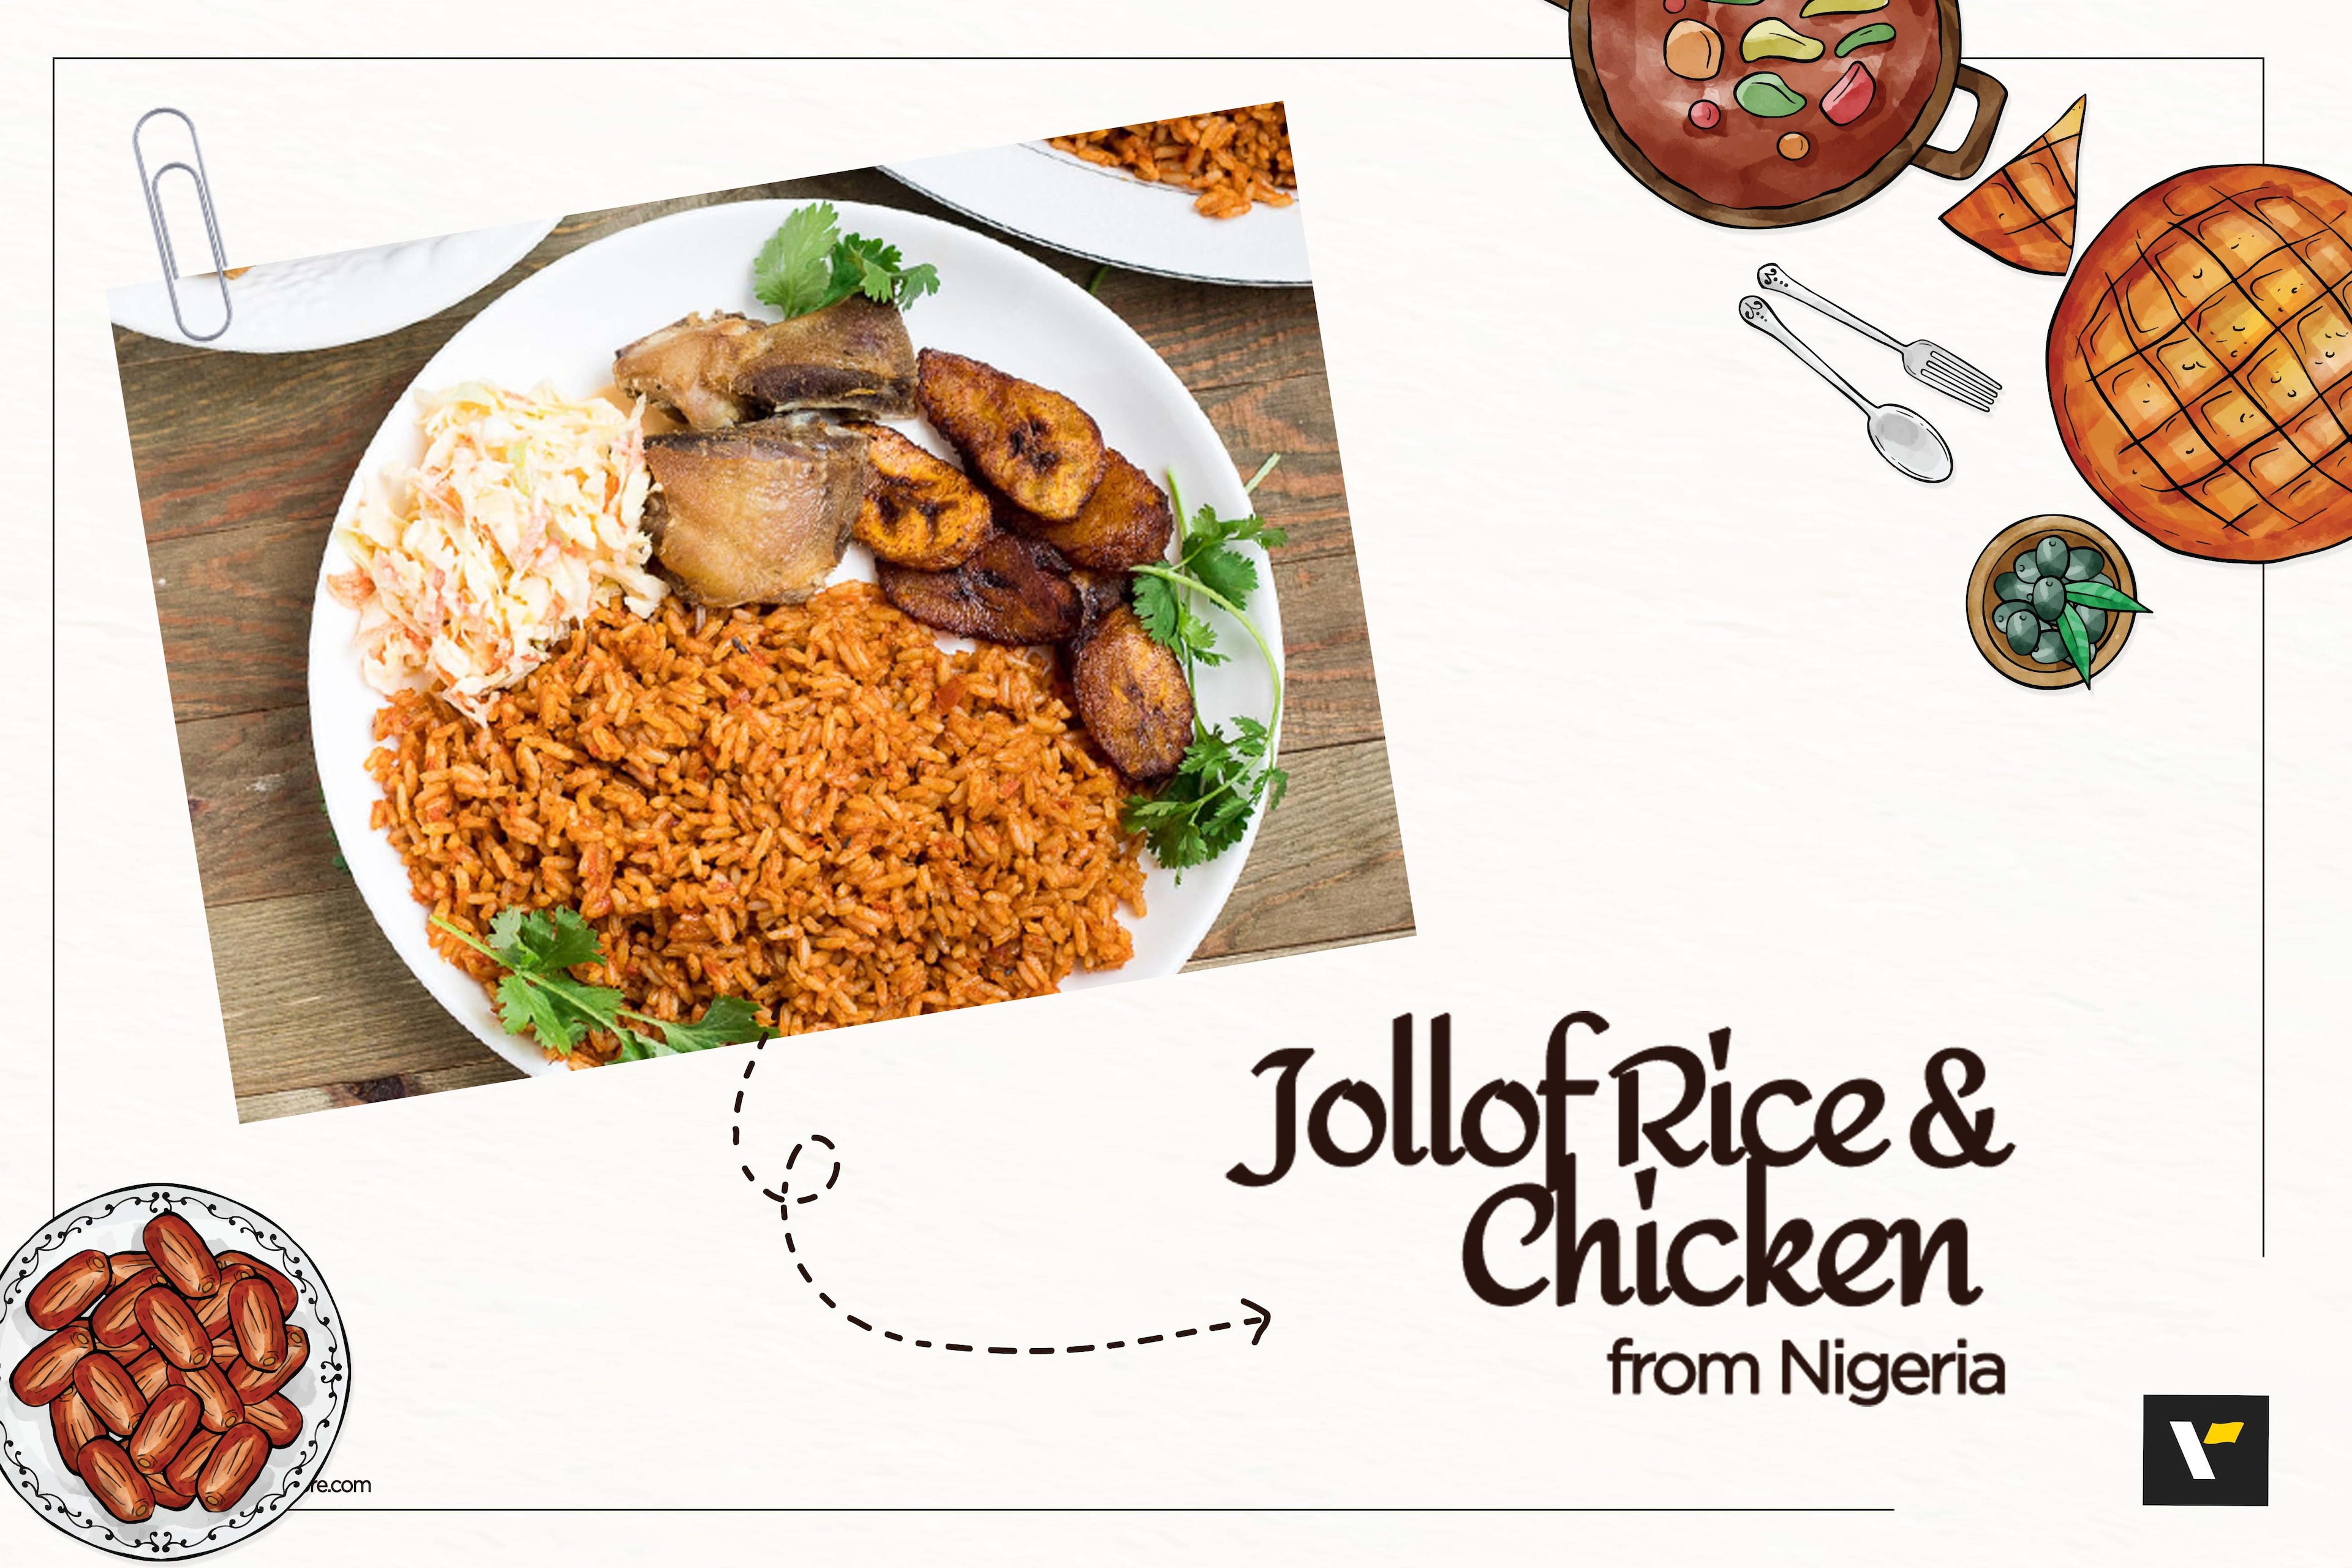 Jollof Rice and Chicken from Nigeria